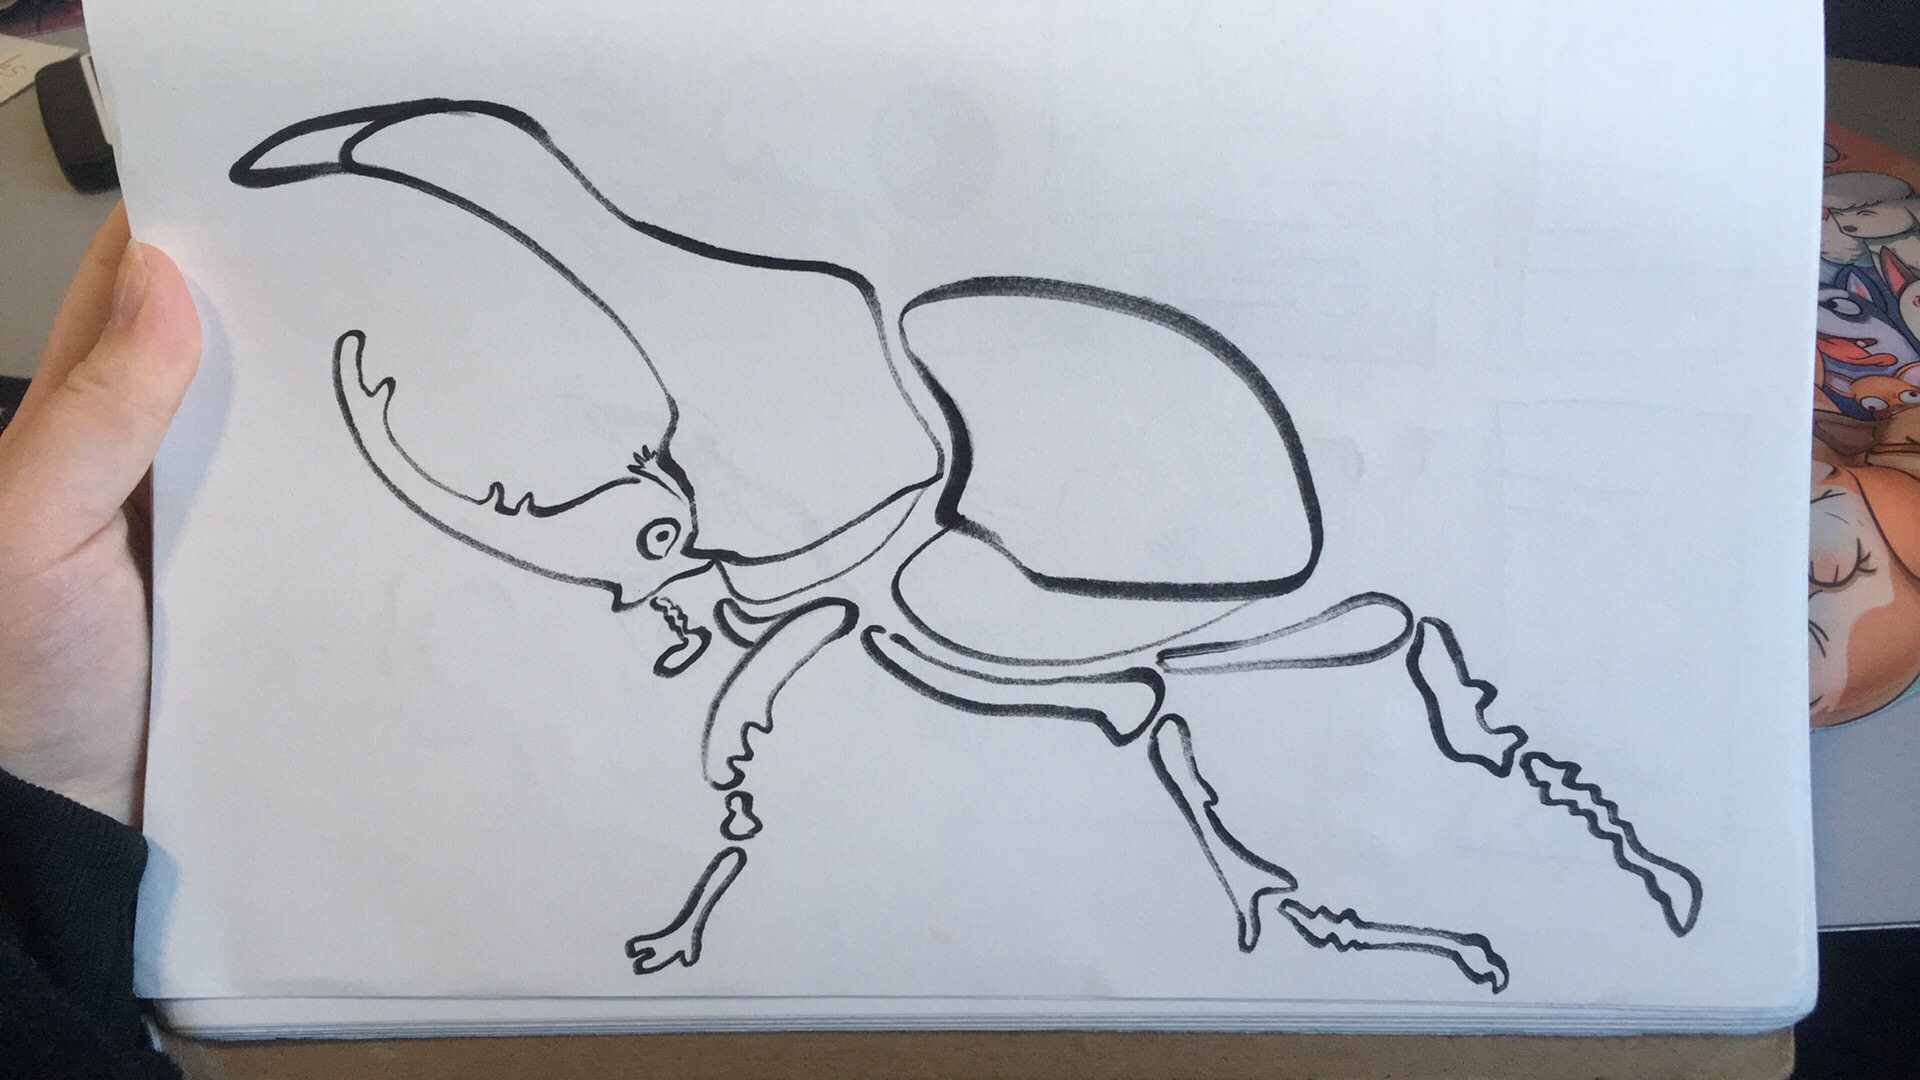 Beetle Drawing